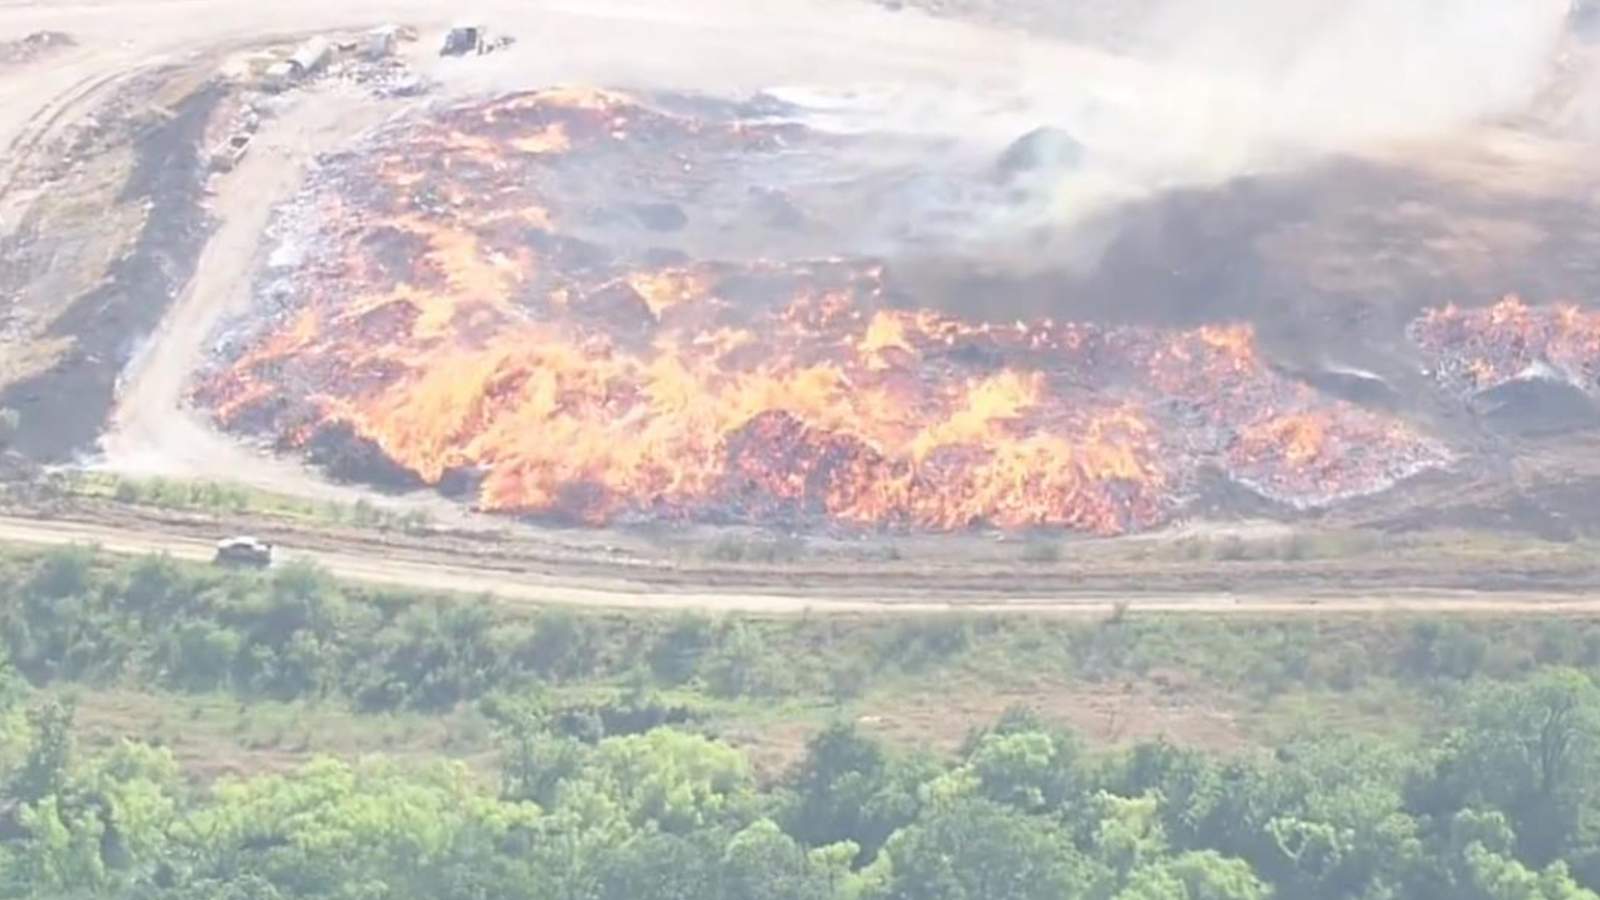 WATCH LIVE: Firefighters battle massive brush fire near Highway 78